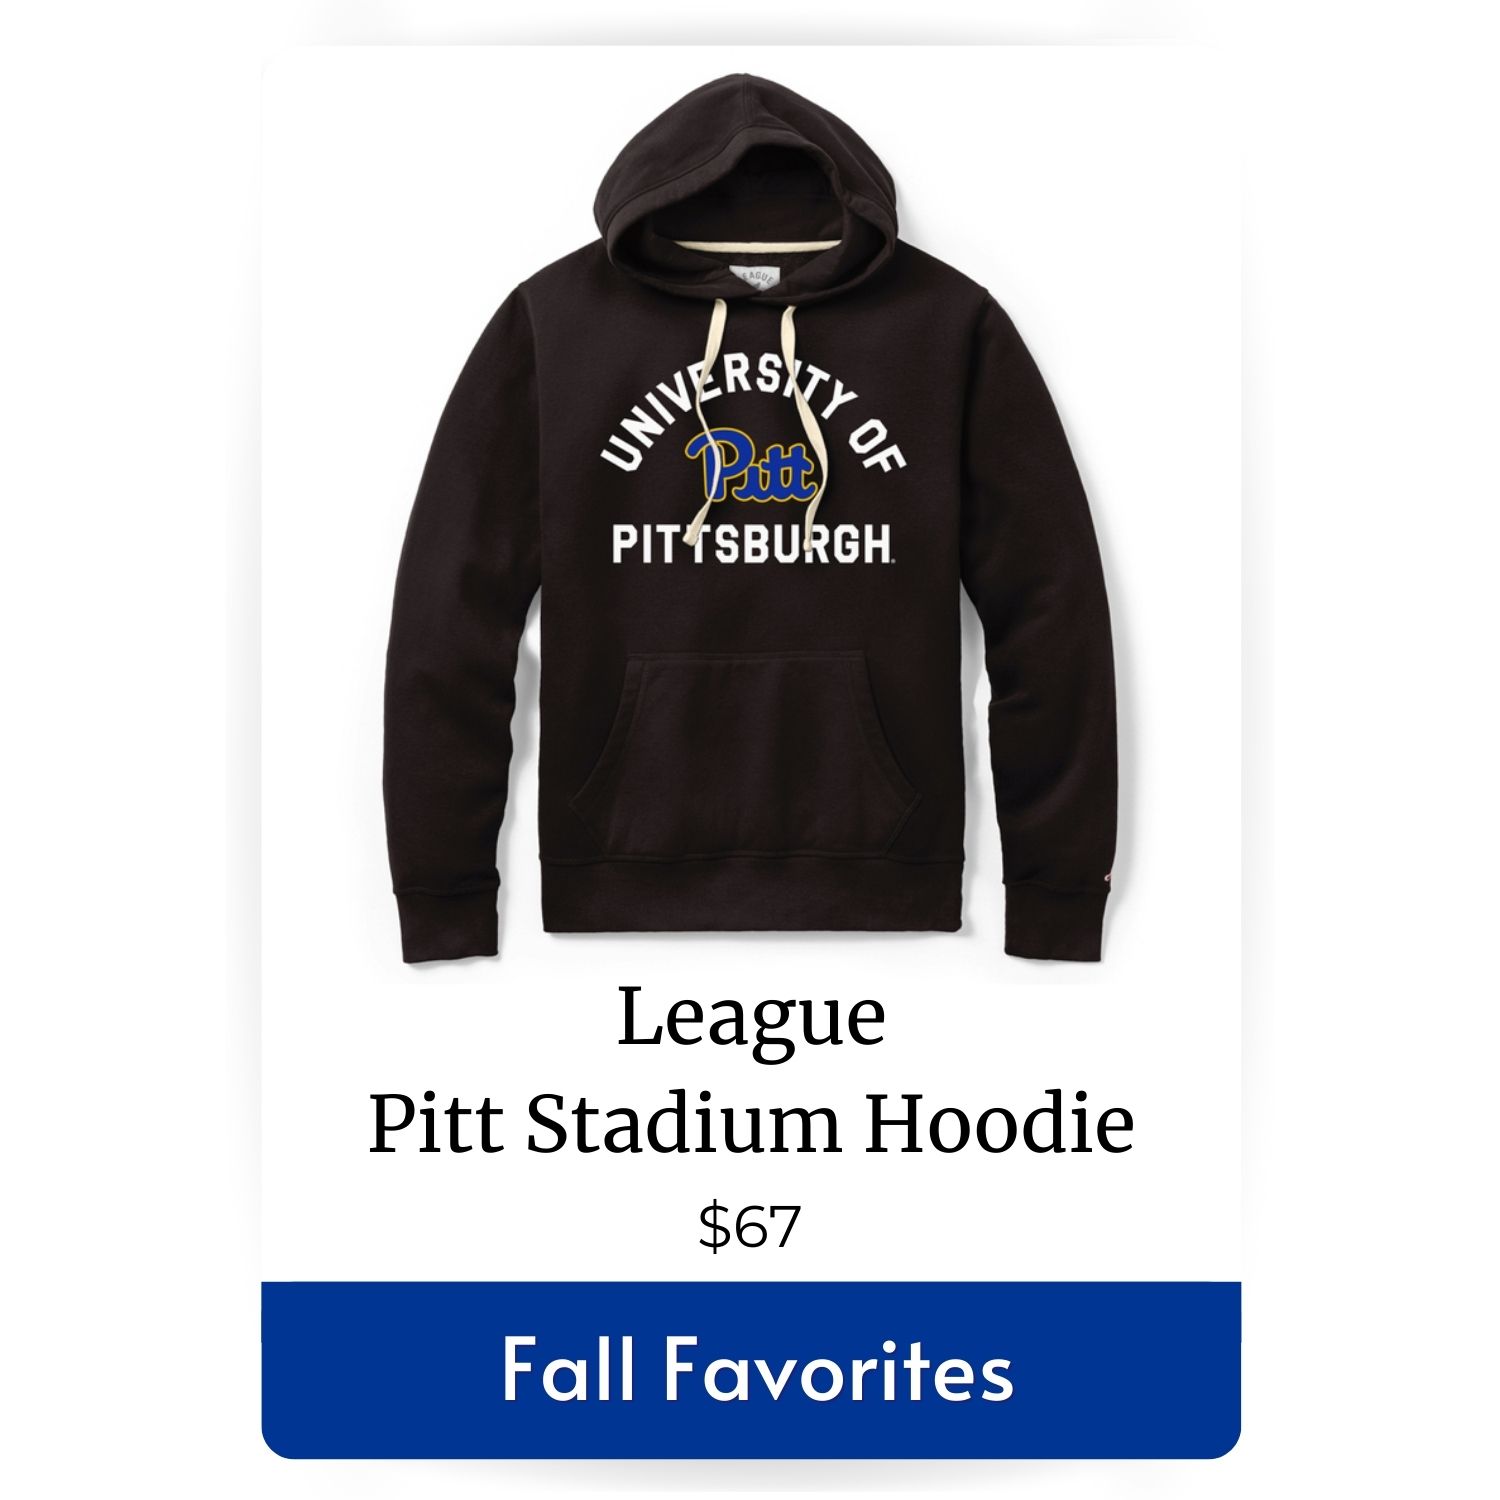 League Pitt Stadium Hoodie image